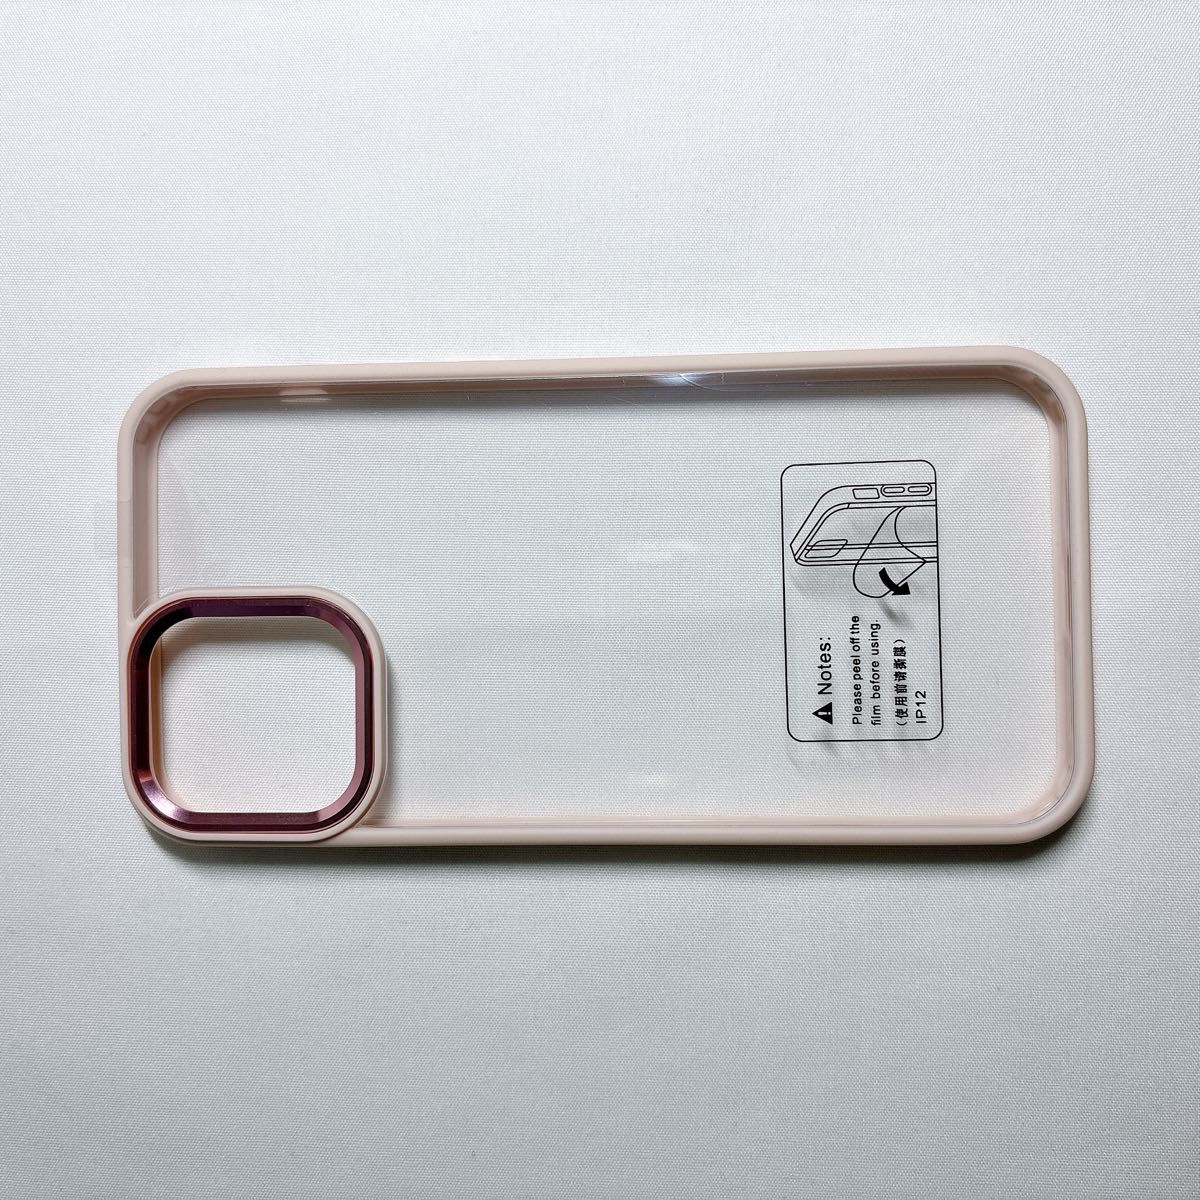 iPhone12 ケース ピンク シンプル 韓国  軽量 スマホケース クリア 透明  可愛い お洒落  耐衝撃 カバー 無地